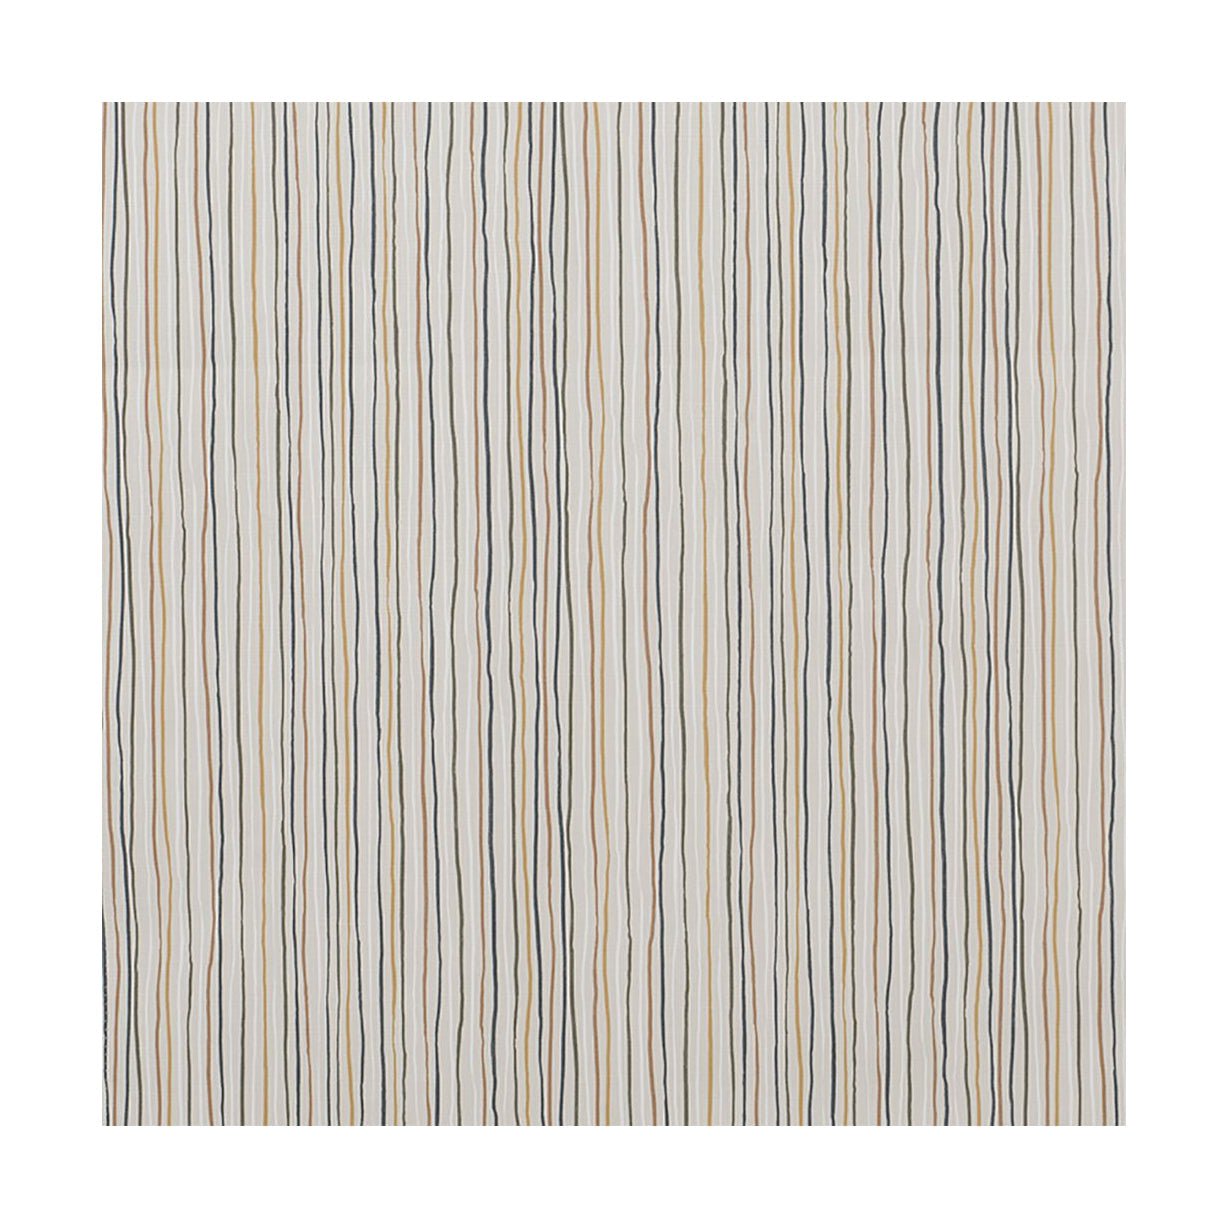 Spira Stripe Fabric Width 150 Cm (Price Per Meter), Multicolored